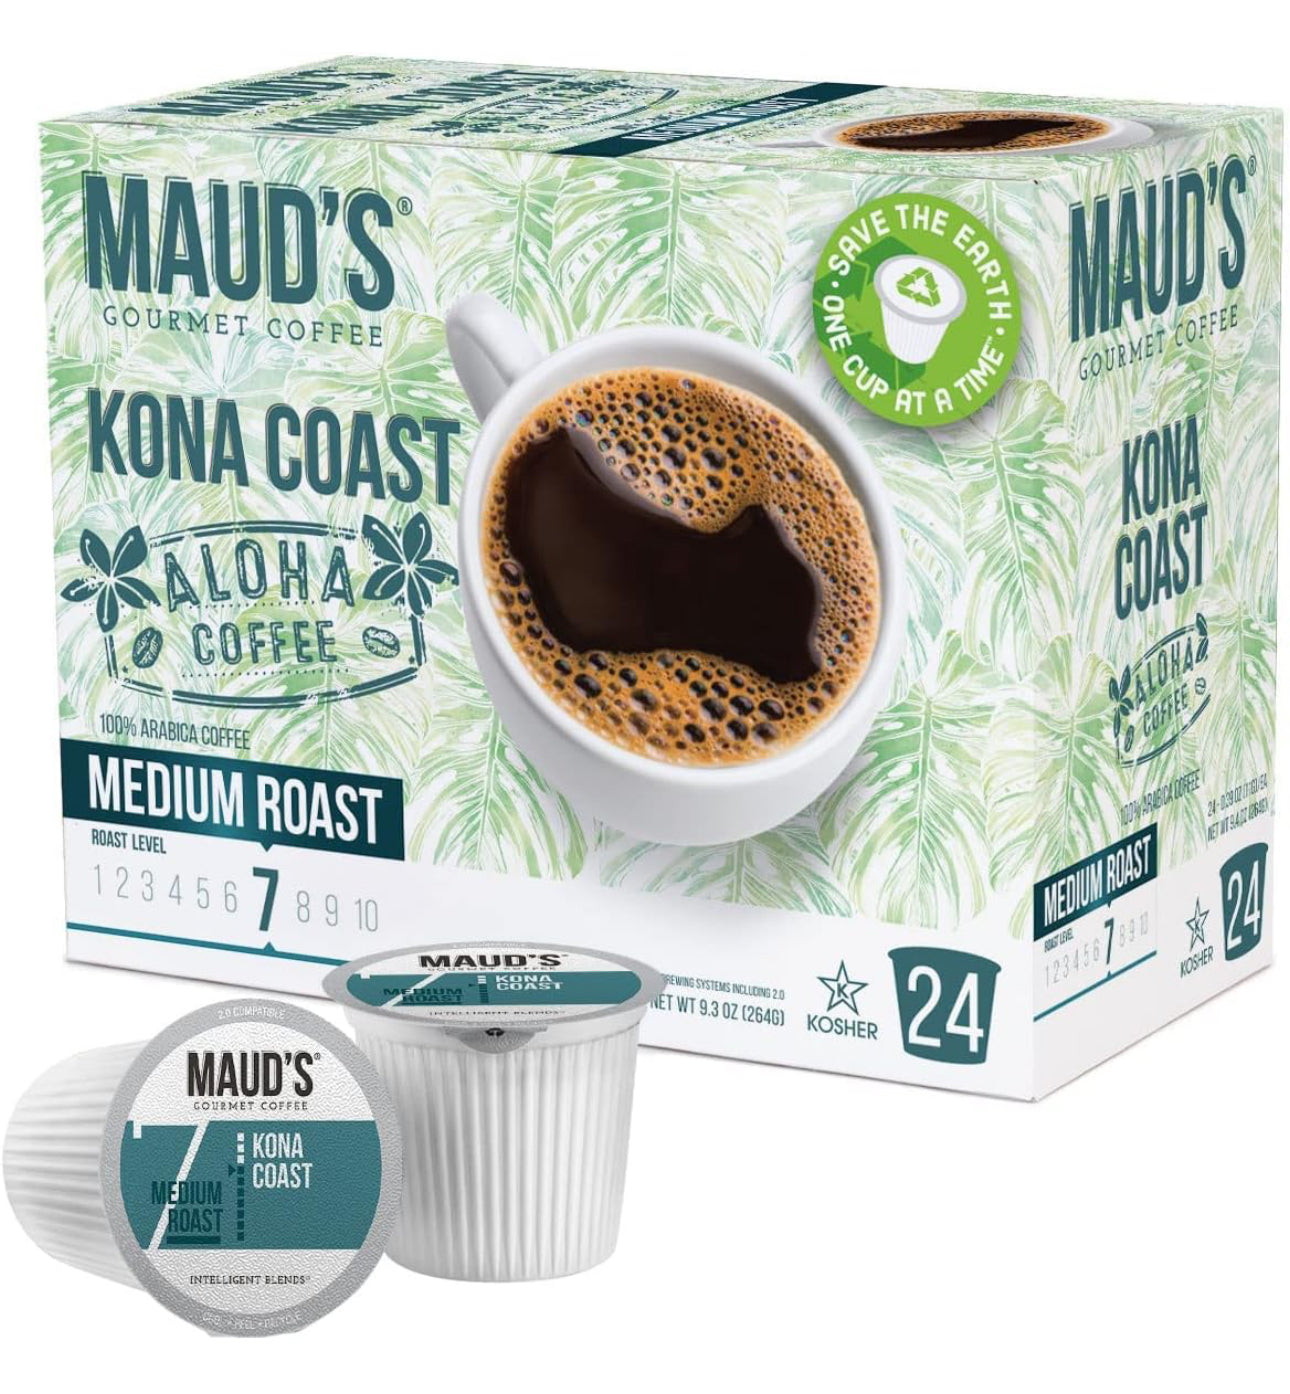 MARTINSON® Kona Blend Coffee Pods (24 ct)